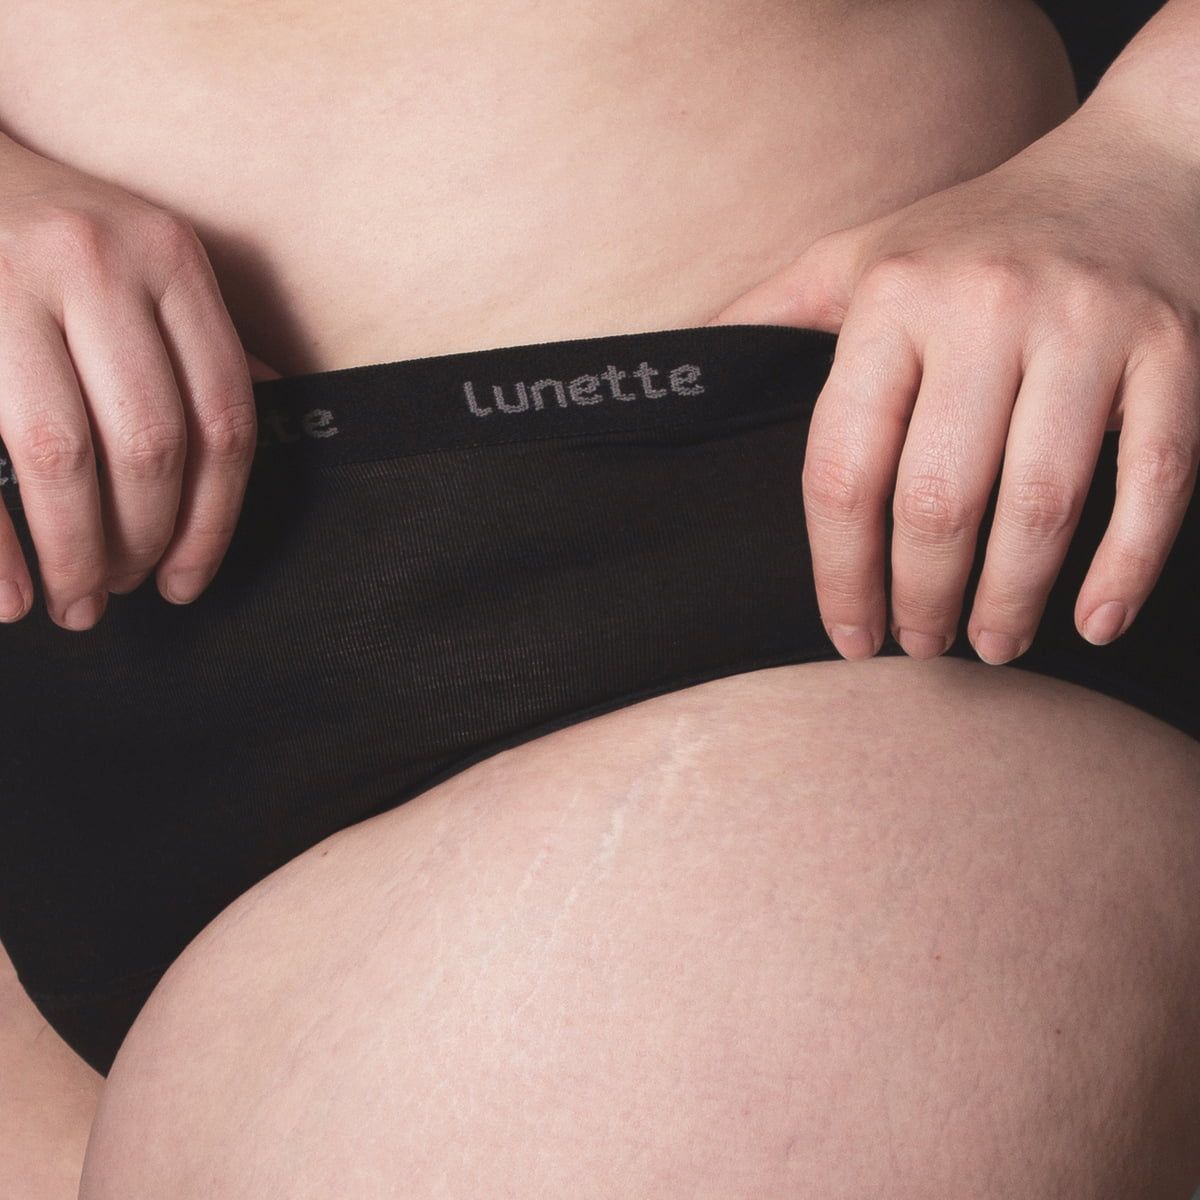 Lunette period panty. majtki menstruacyjne czarne - Ecco Verde